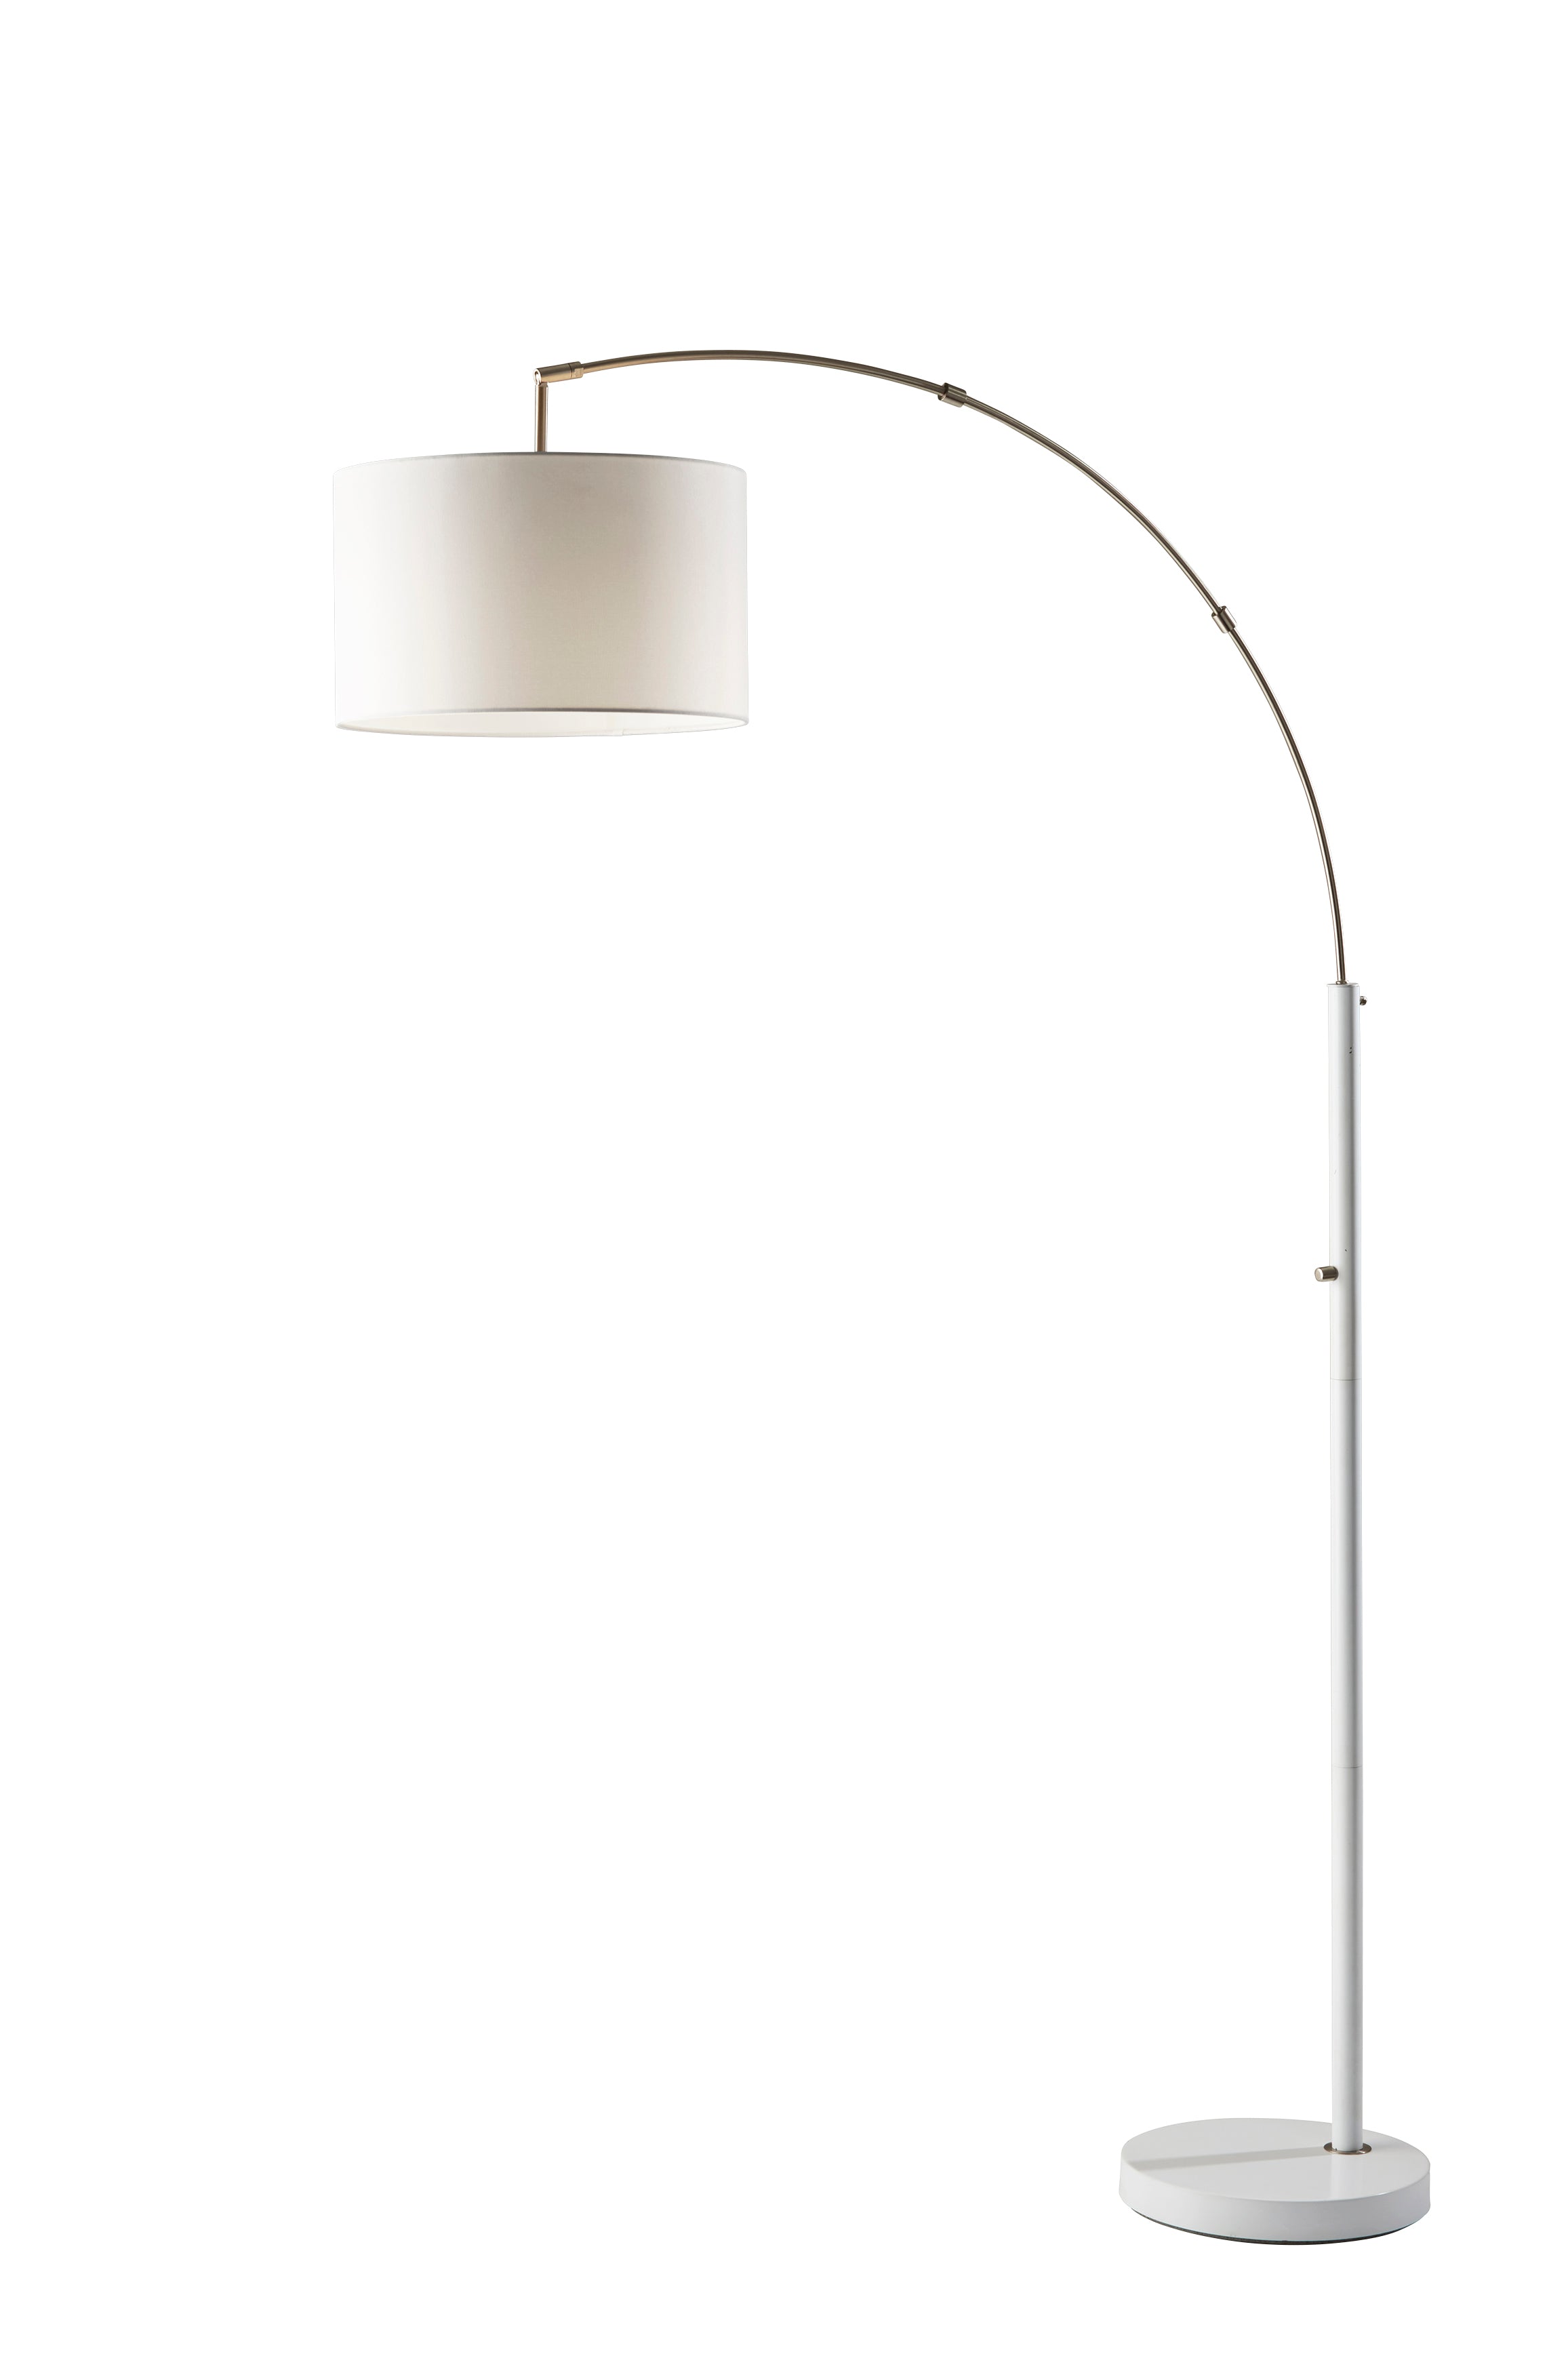 PRESTON Floor lamp White, Stainless steel - 4012-02 | ADESSO